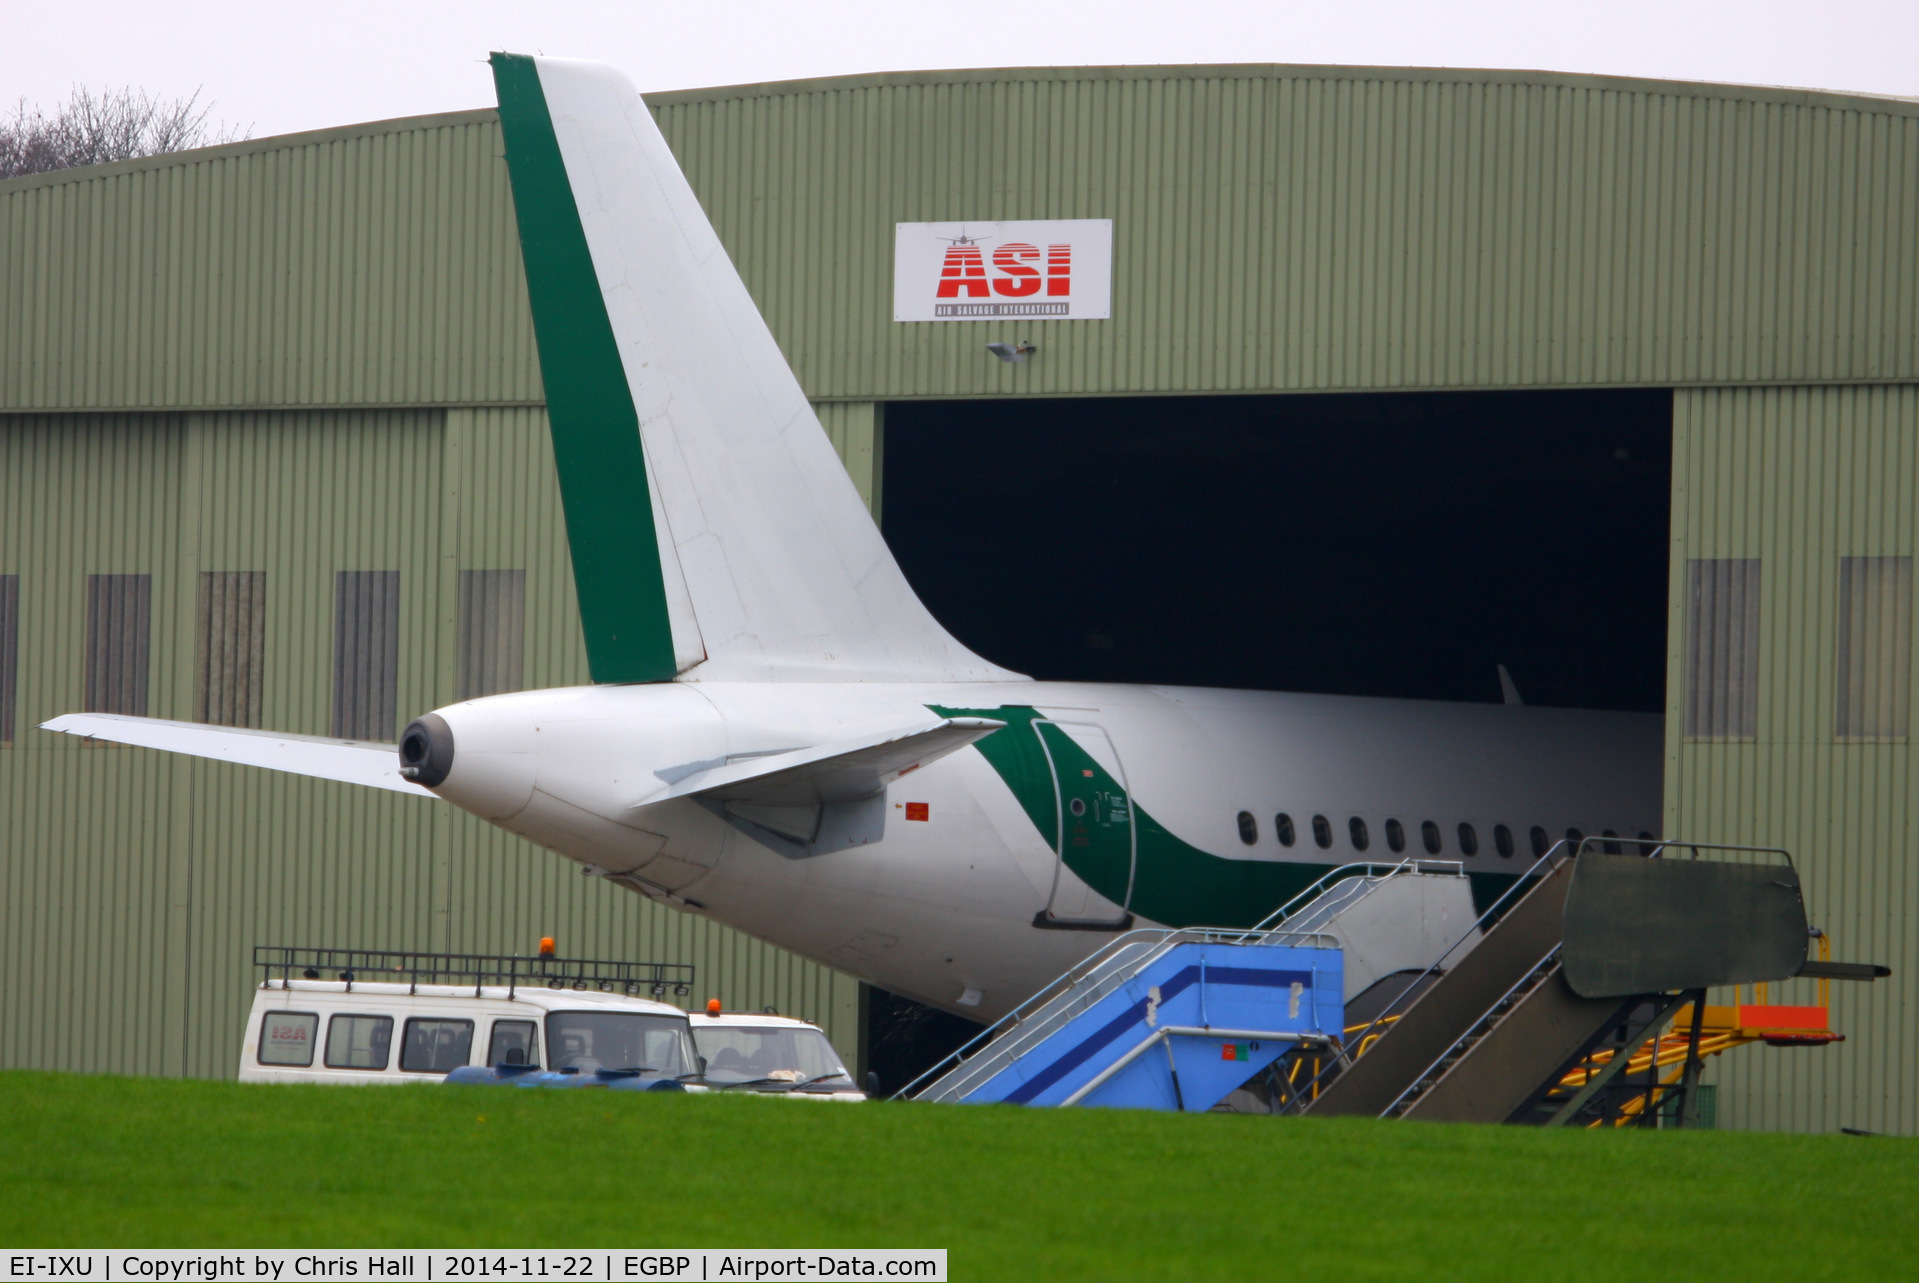 EI-IXU, 1993 Airbus A321-111 C/N 434, ex Alitalia A321 in the ASI hangar at Kemble